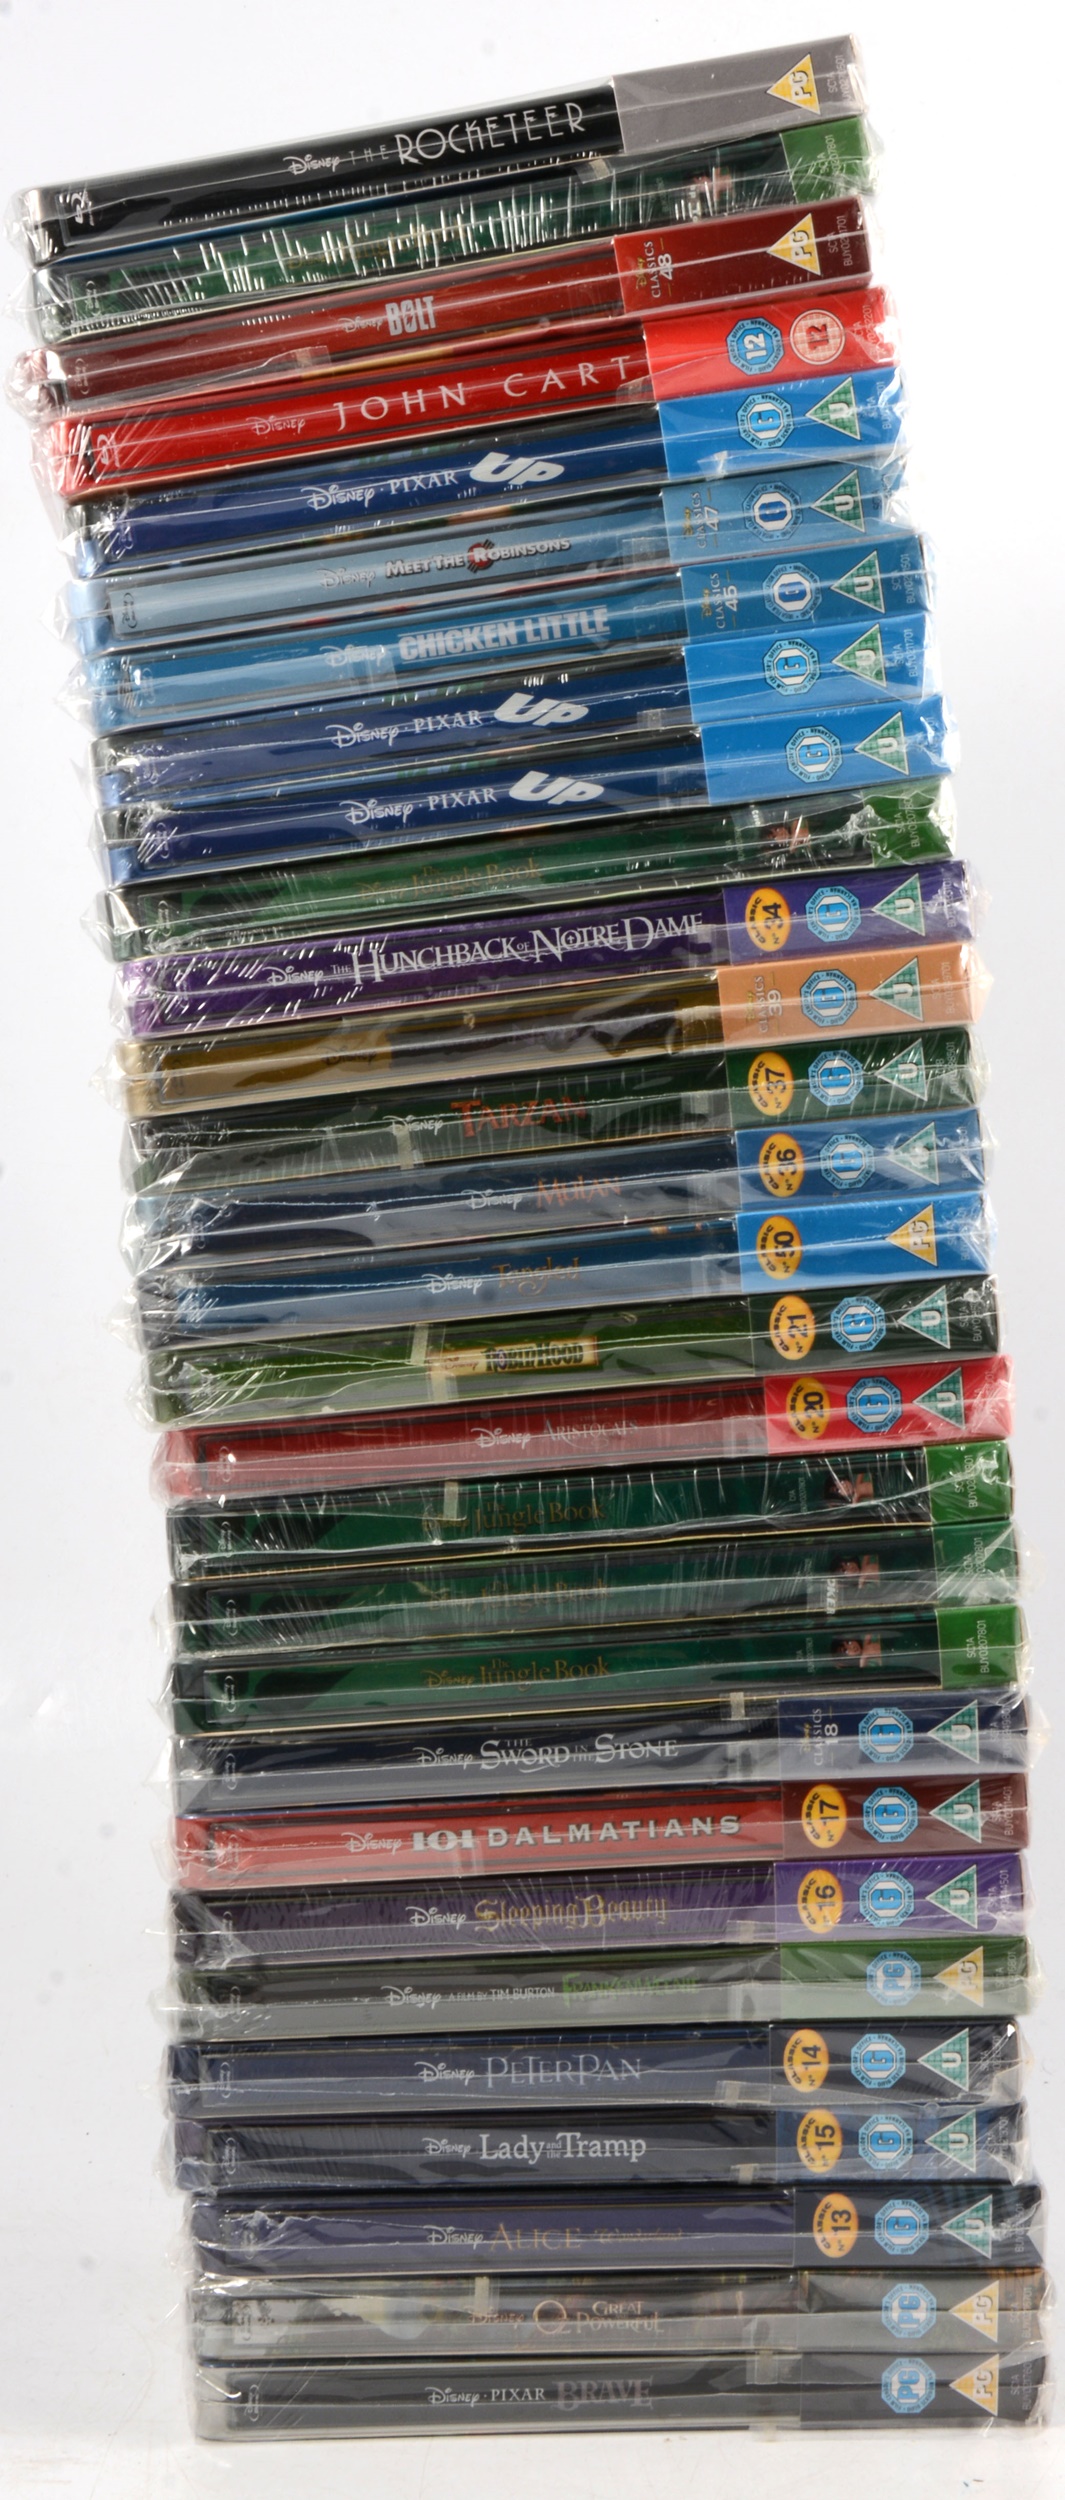 Steelbook Blue-ray Disney selection, twenty-nine including The Rocketeer, lenticular cover etc